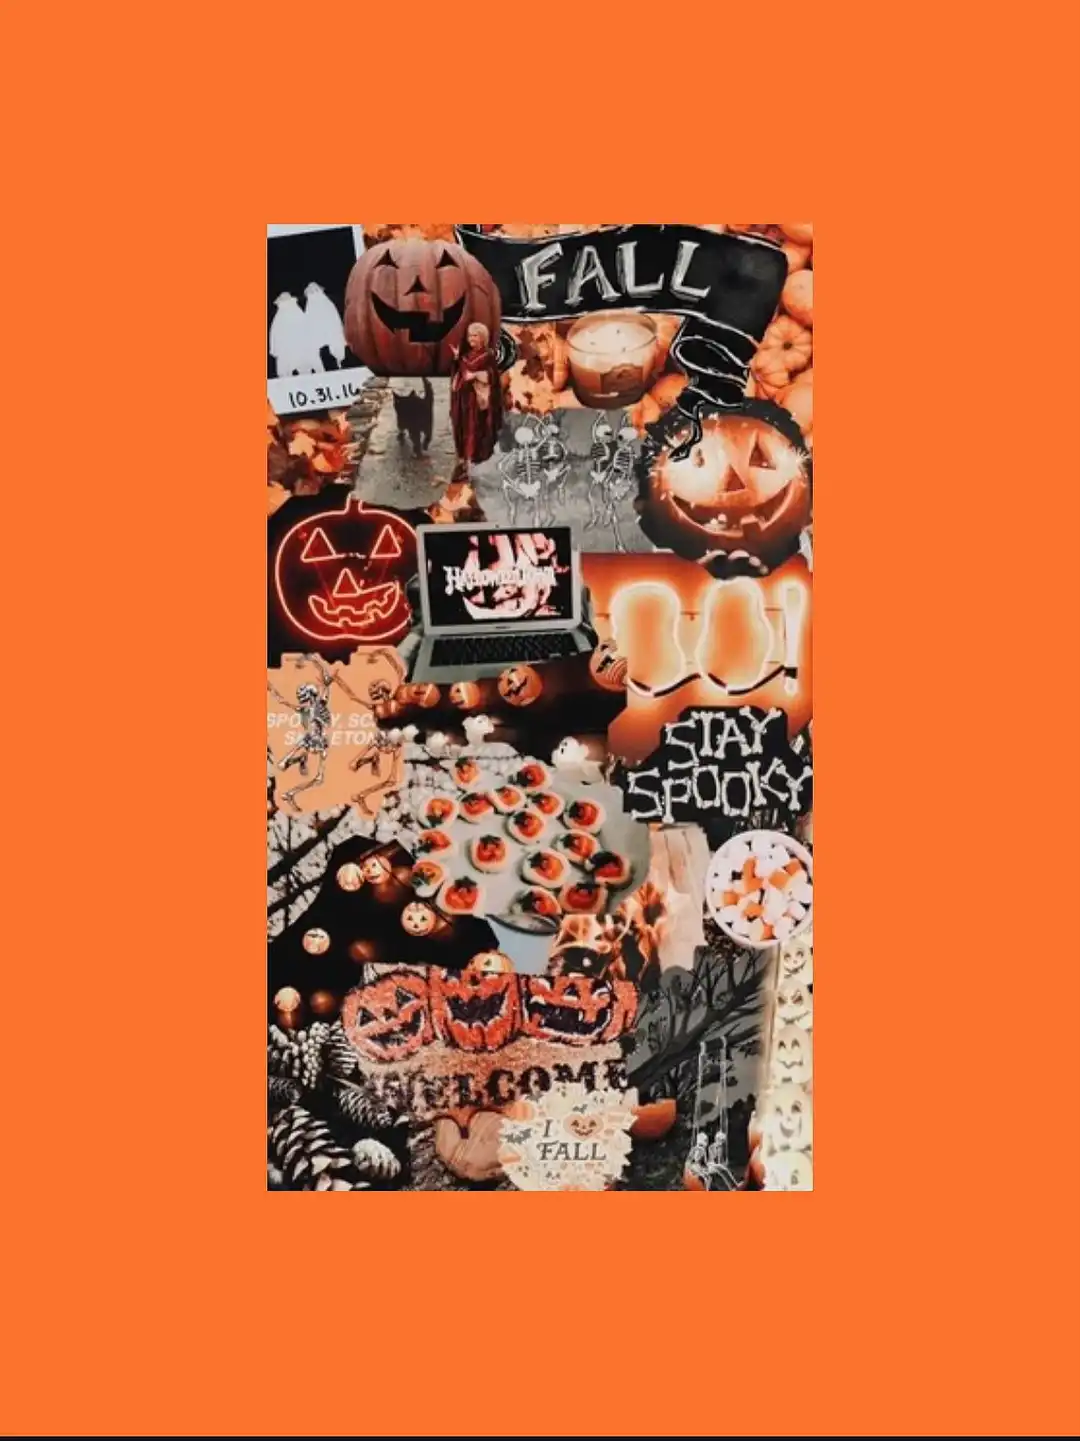 Halloween wallpaper for phone or desktop! (free download) in 2020 - Spooky